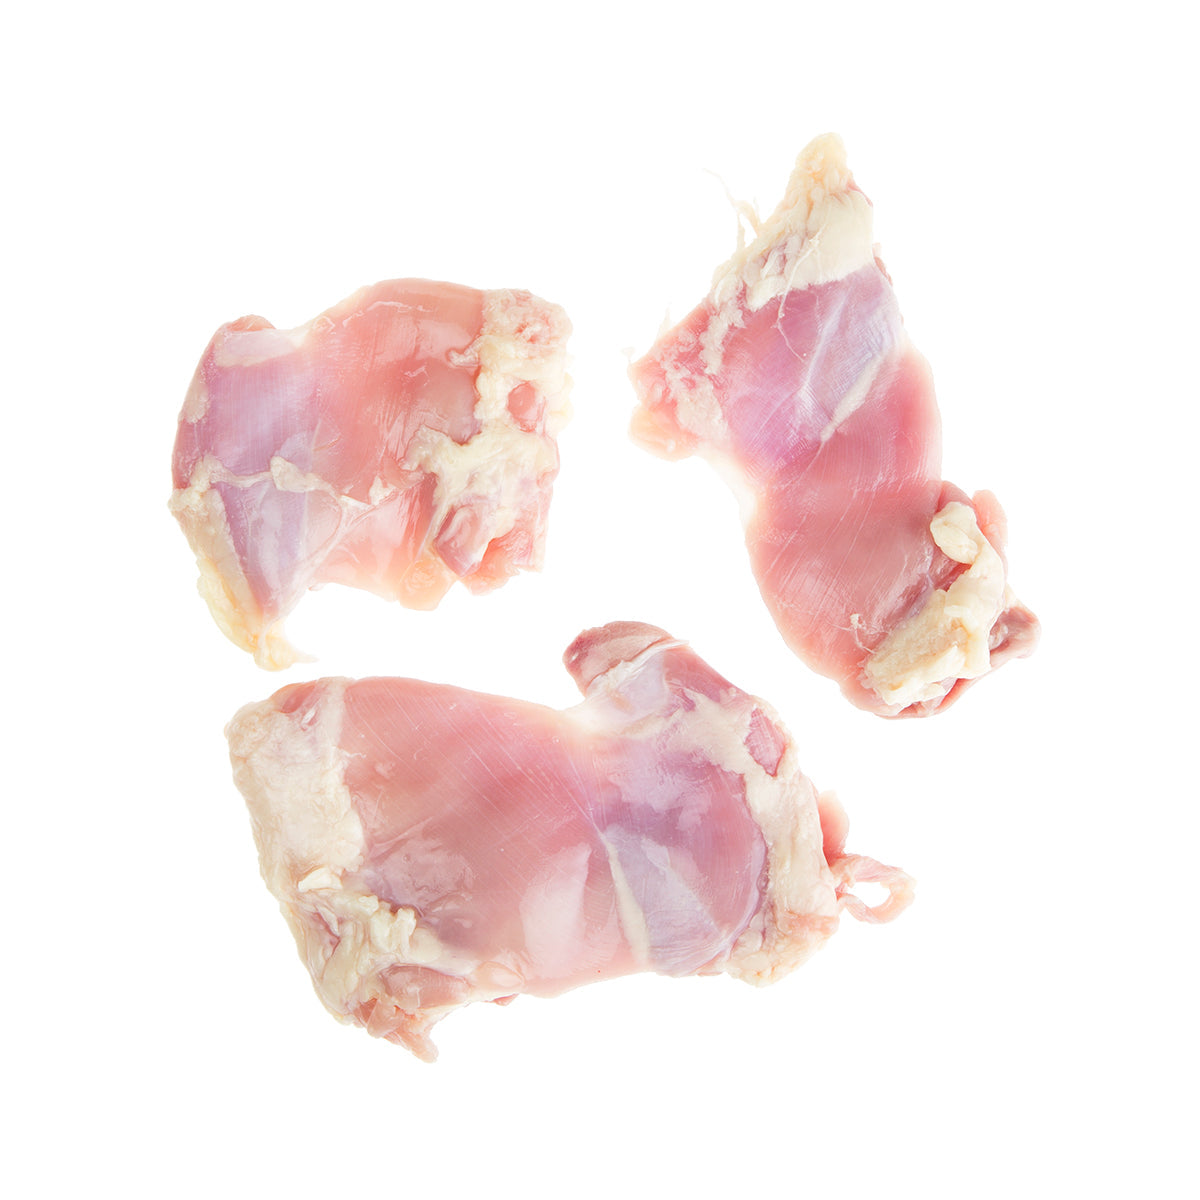 La Belle Farm Organic Air Chilled Boneless Skinless Chicken Thighs